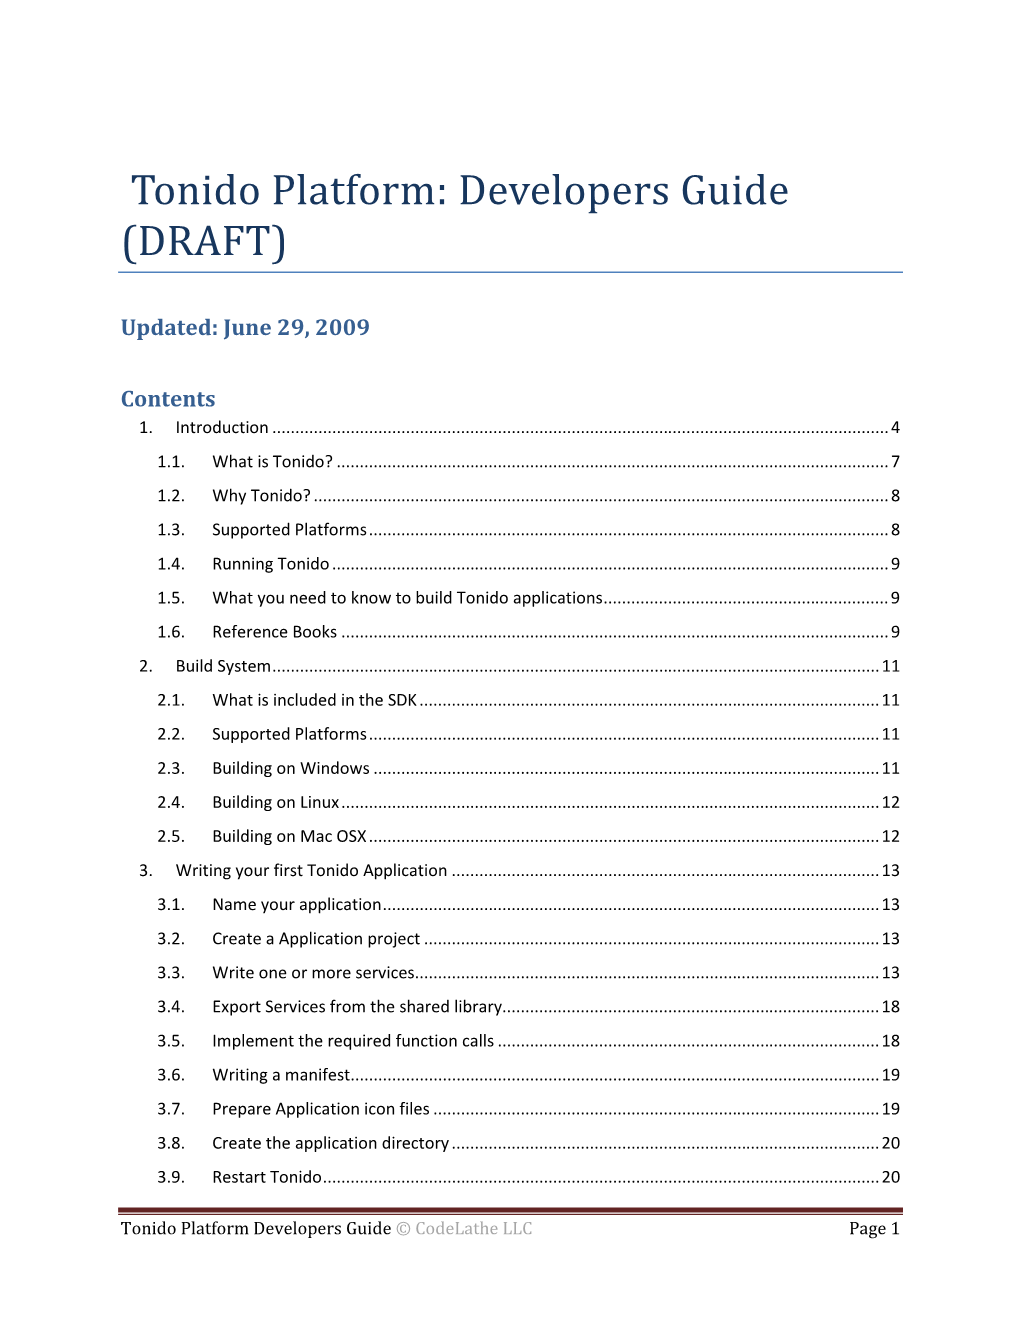 Tonido Platform: Developers Guide (DRAFT)